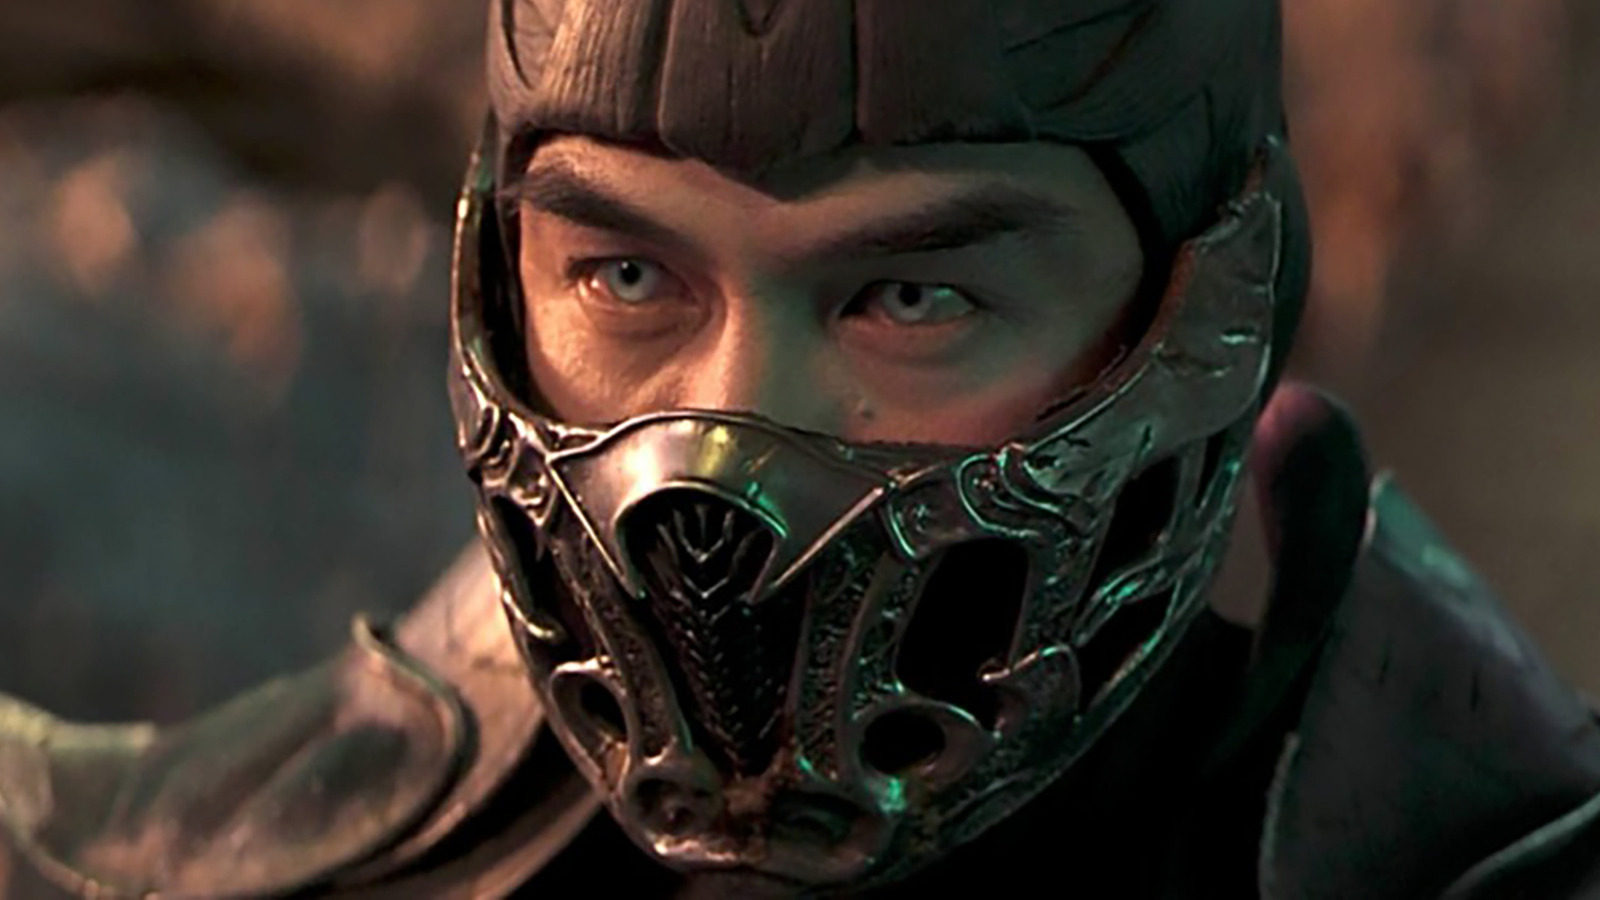 Mortal Kombat 2 Movie - NEW Plot Details & Characters Revealed via